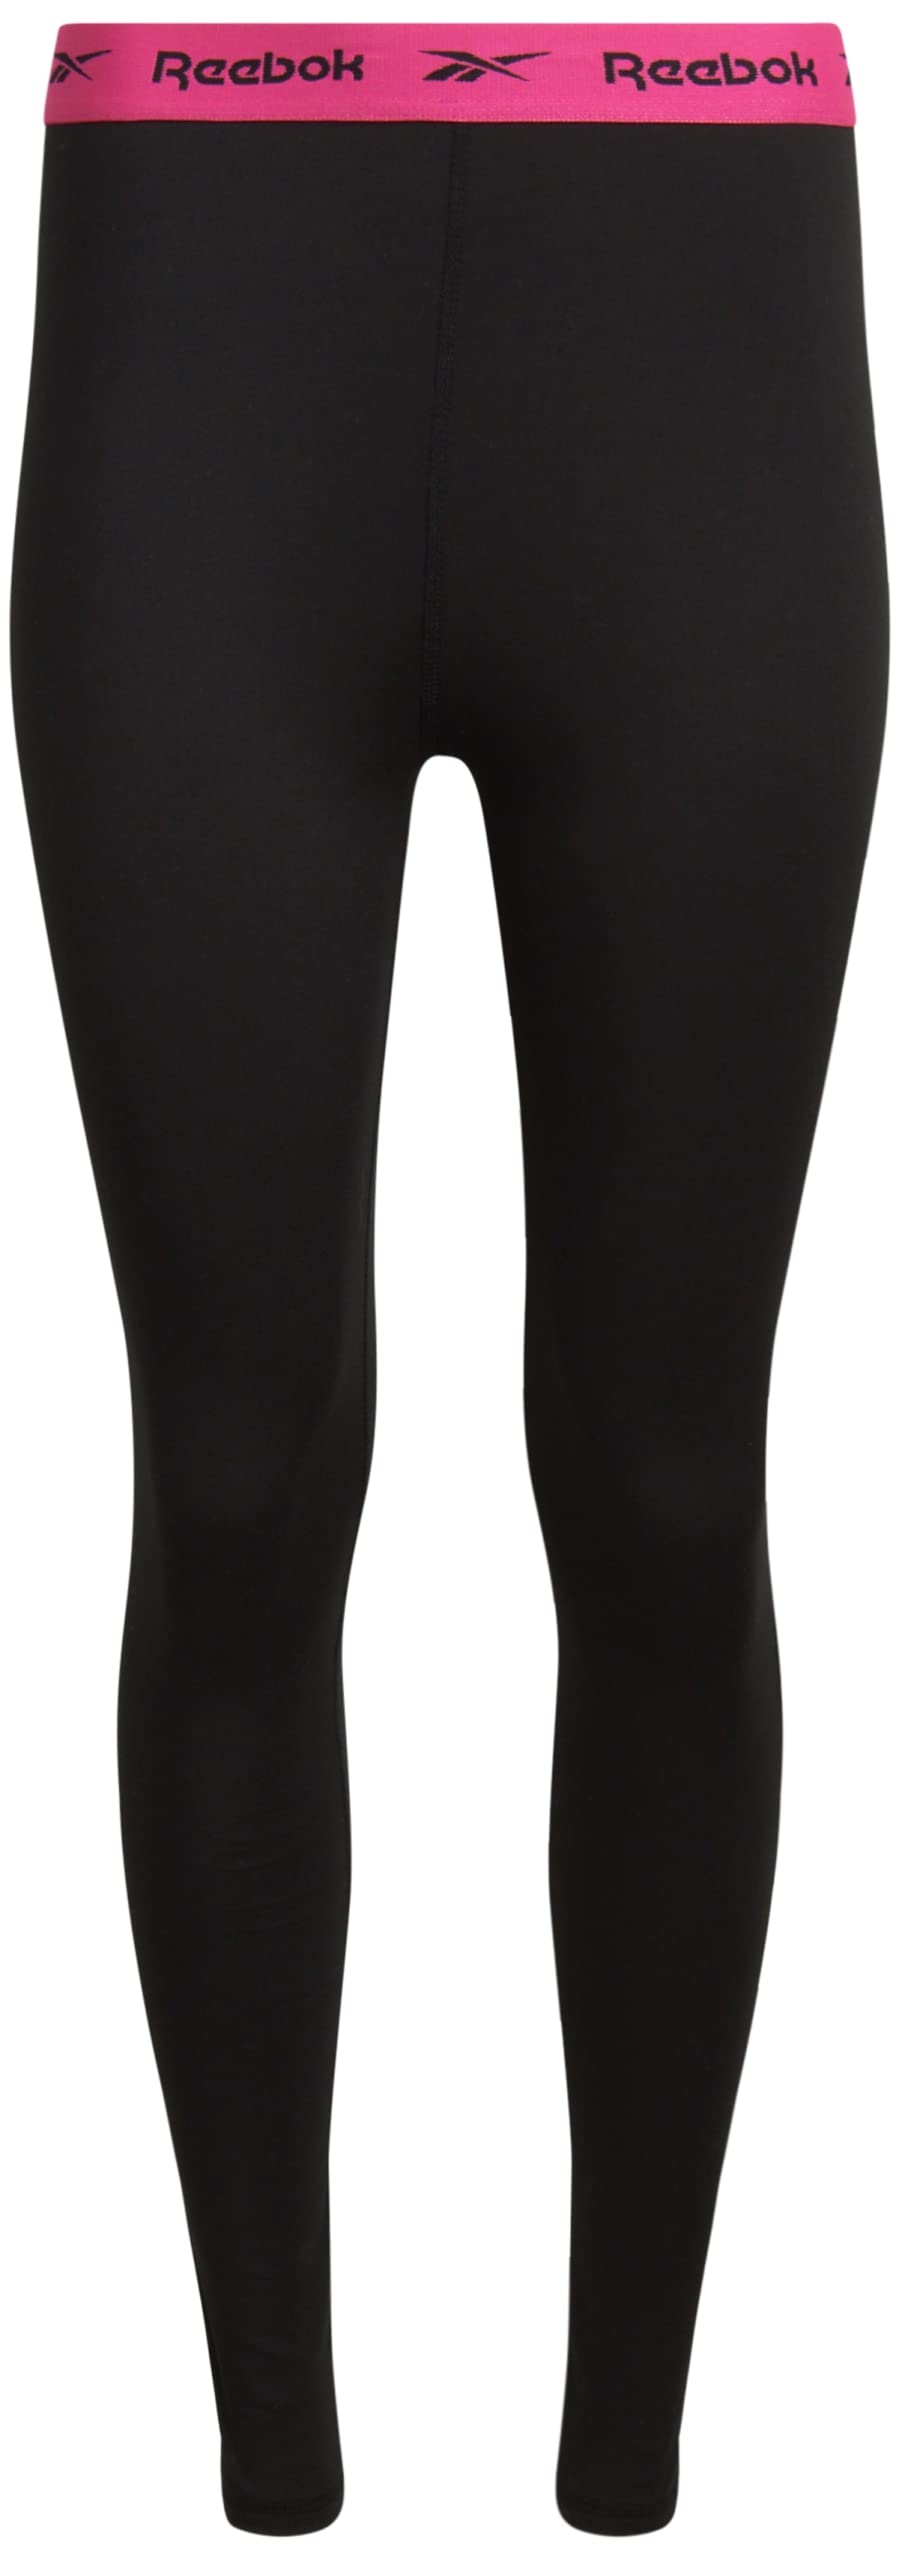 Reebok Women's Performance Leggings - Athletic Base Layer Yoga Pants  Leggings (S-XL) Black Small